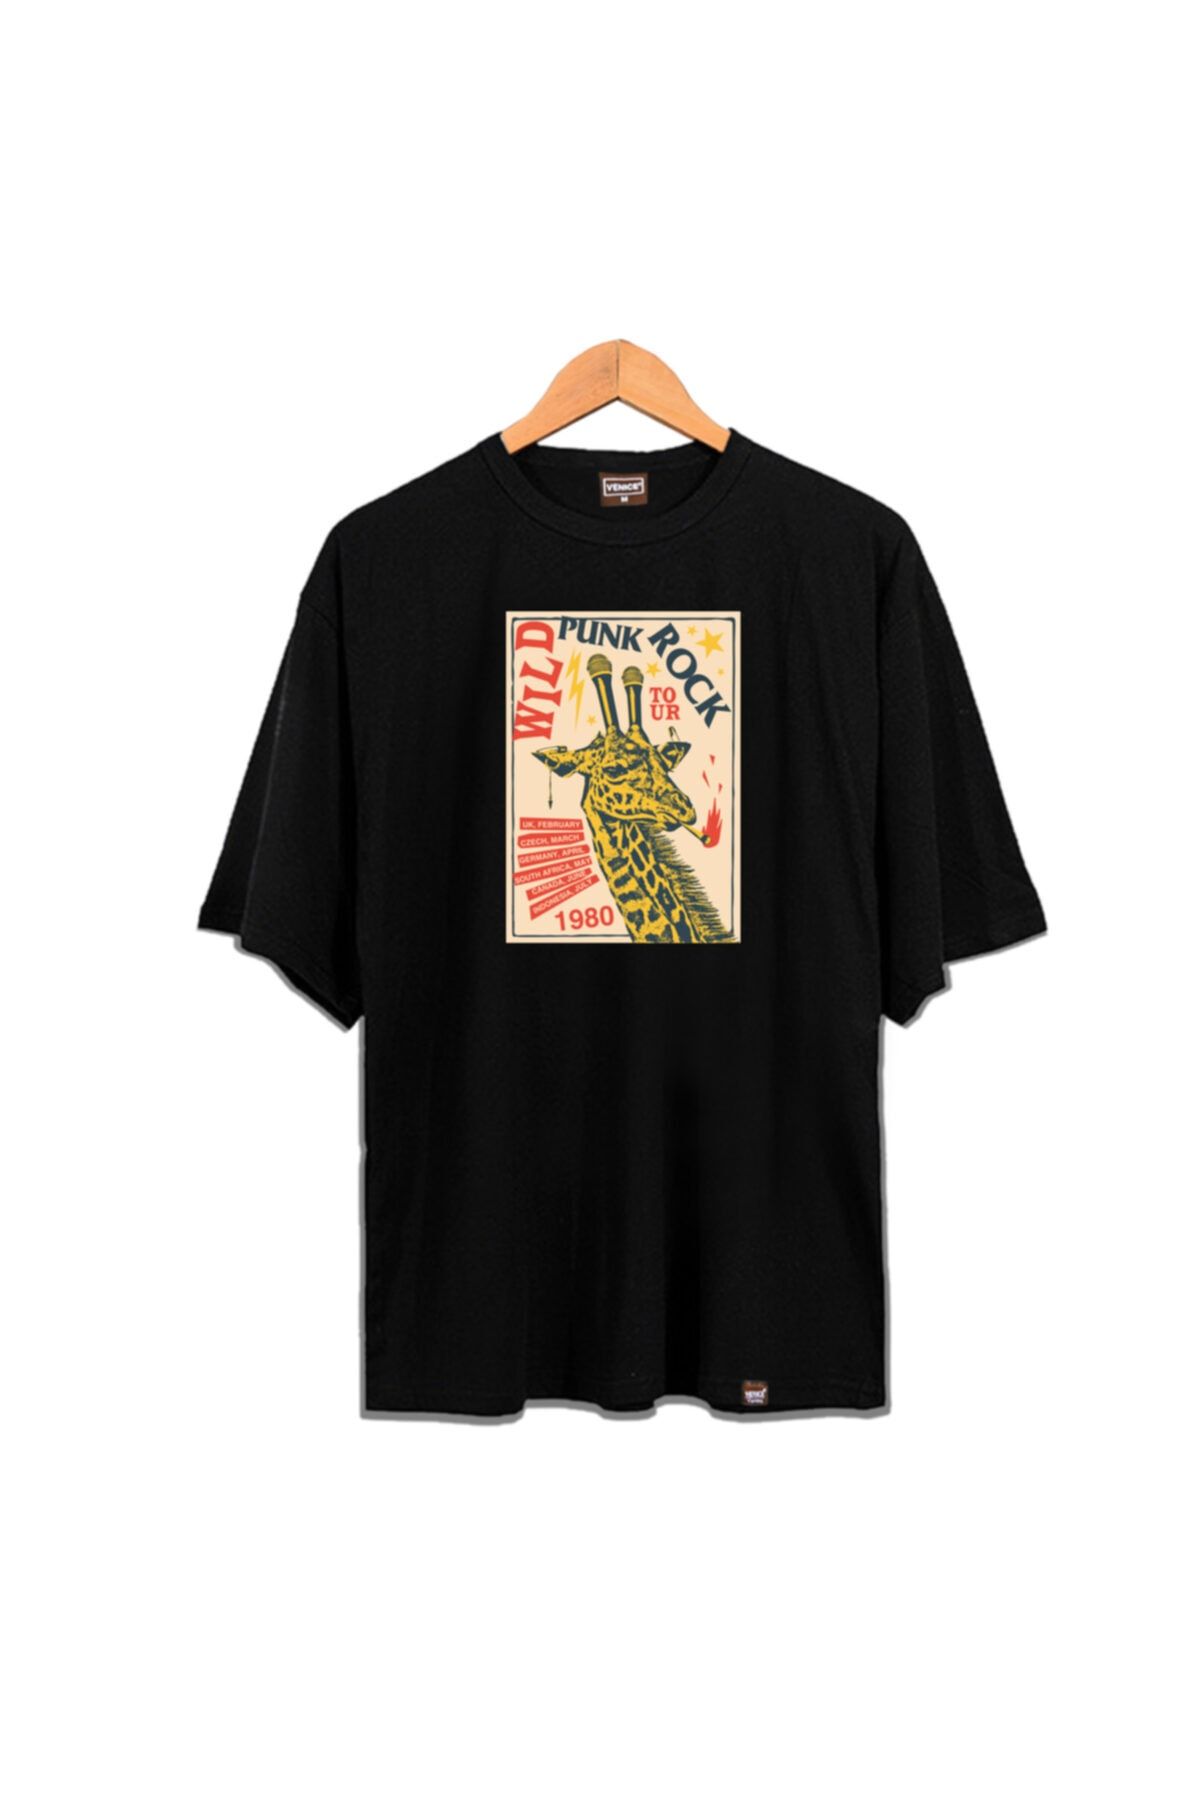 Venice Zokawear - 80s Wild Punk Rock Tour Oldschool Oversize T-shirt